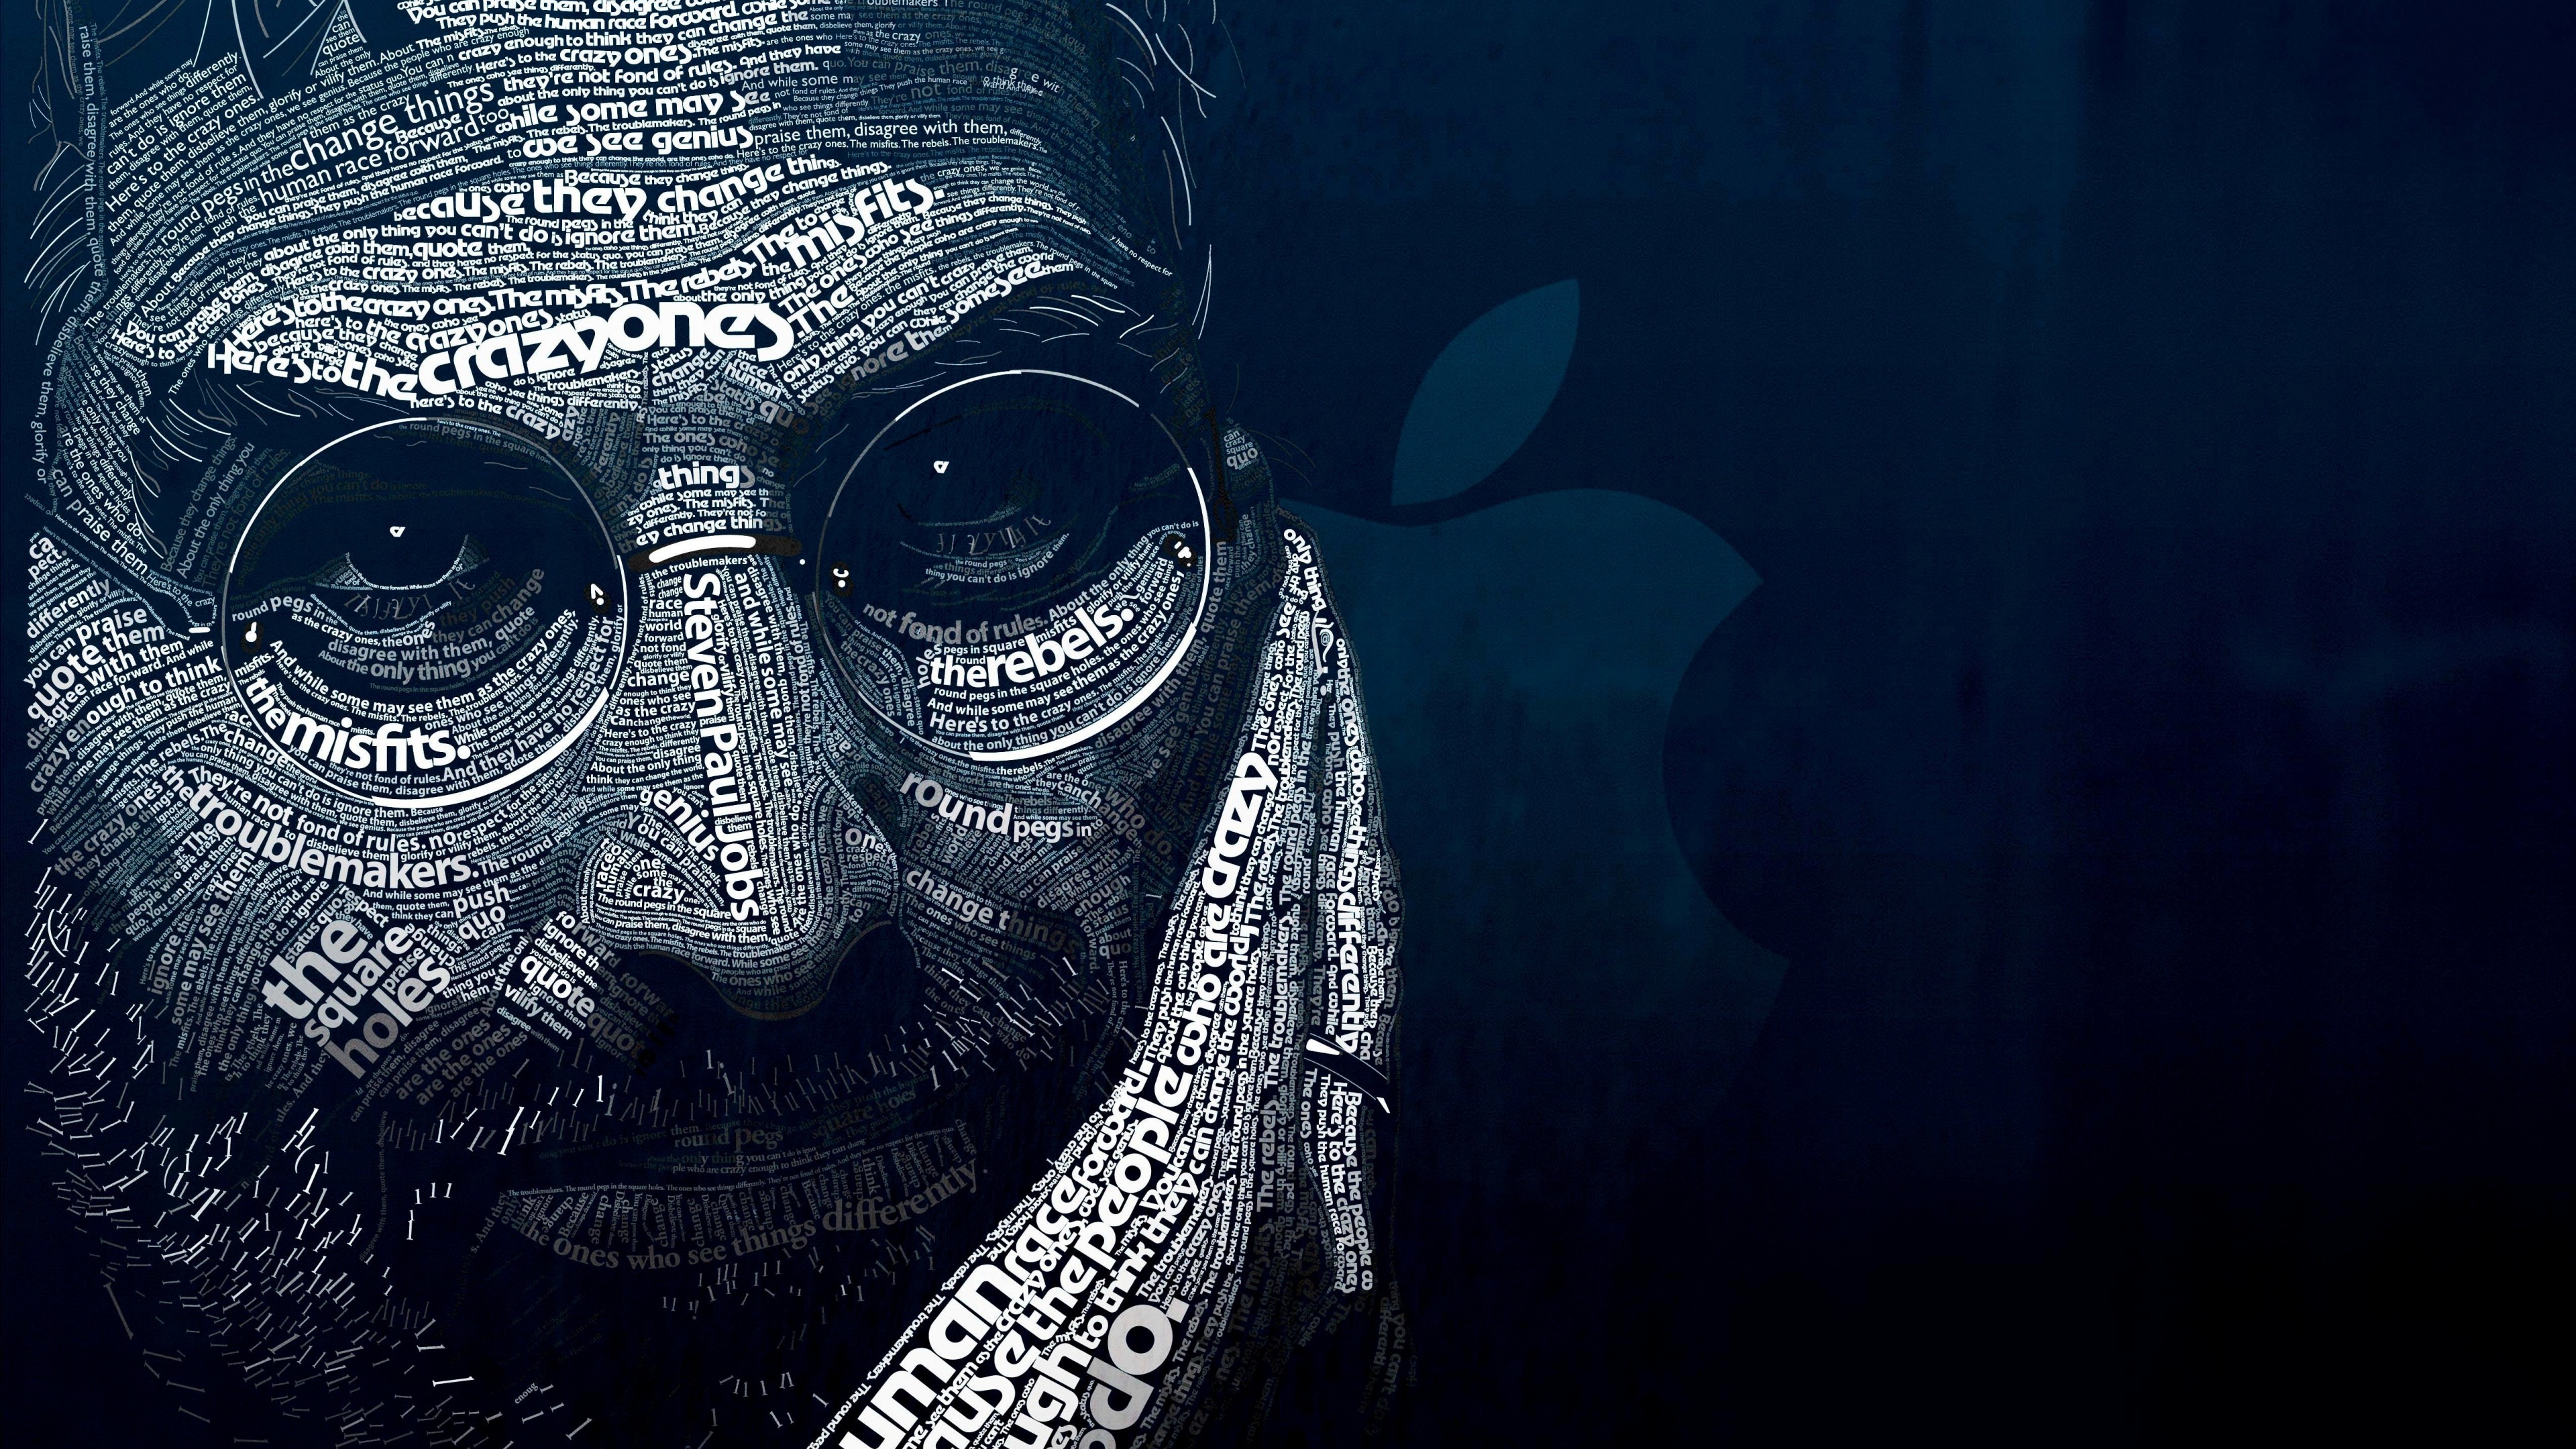 Steve Jobs Typographic Portrait Wallpaper for Desktop 4K 3840x2160